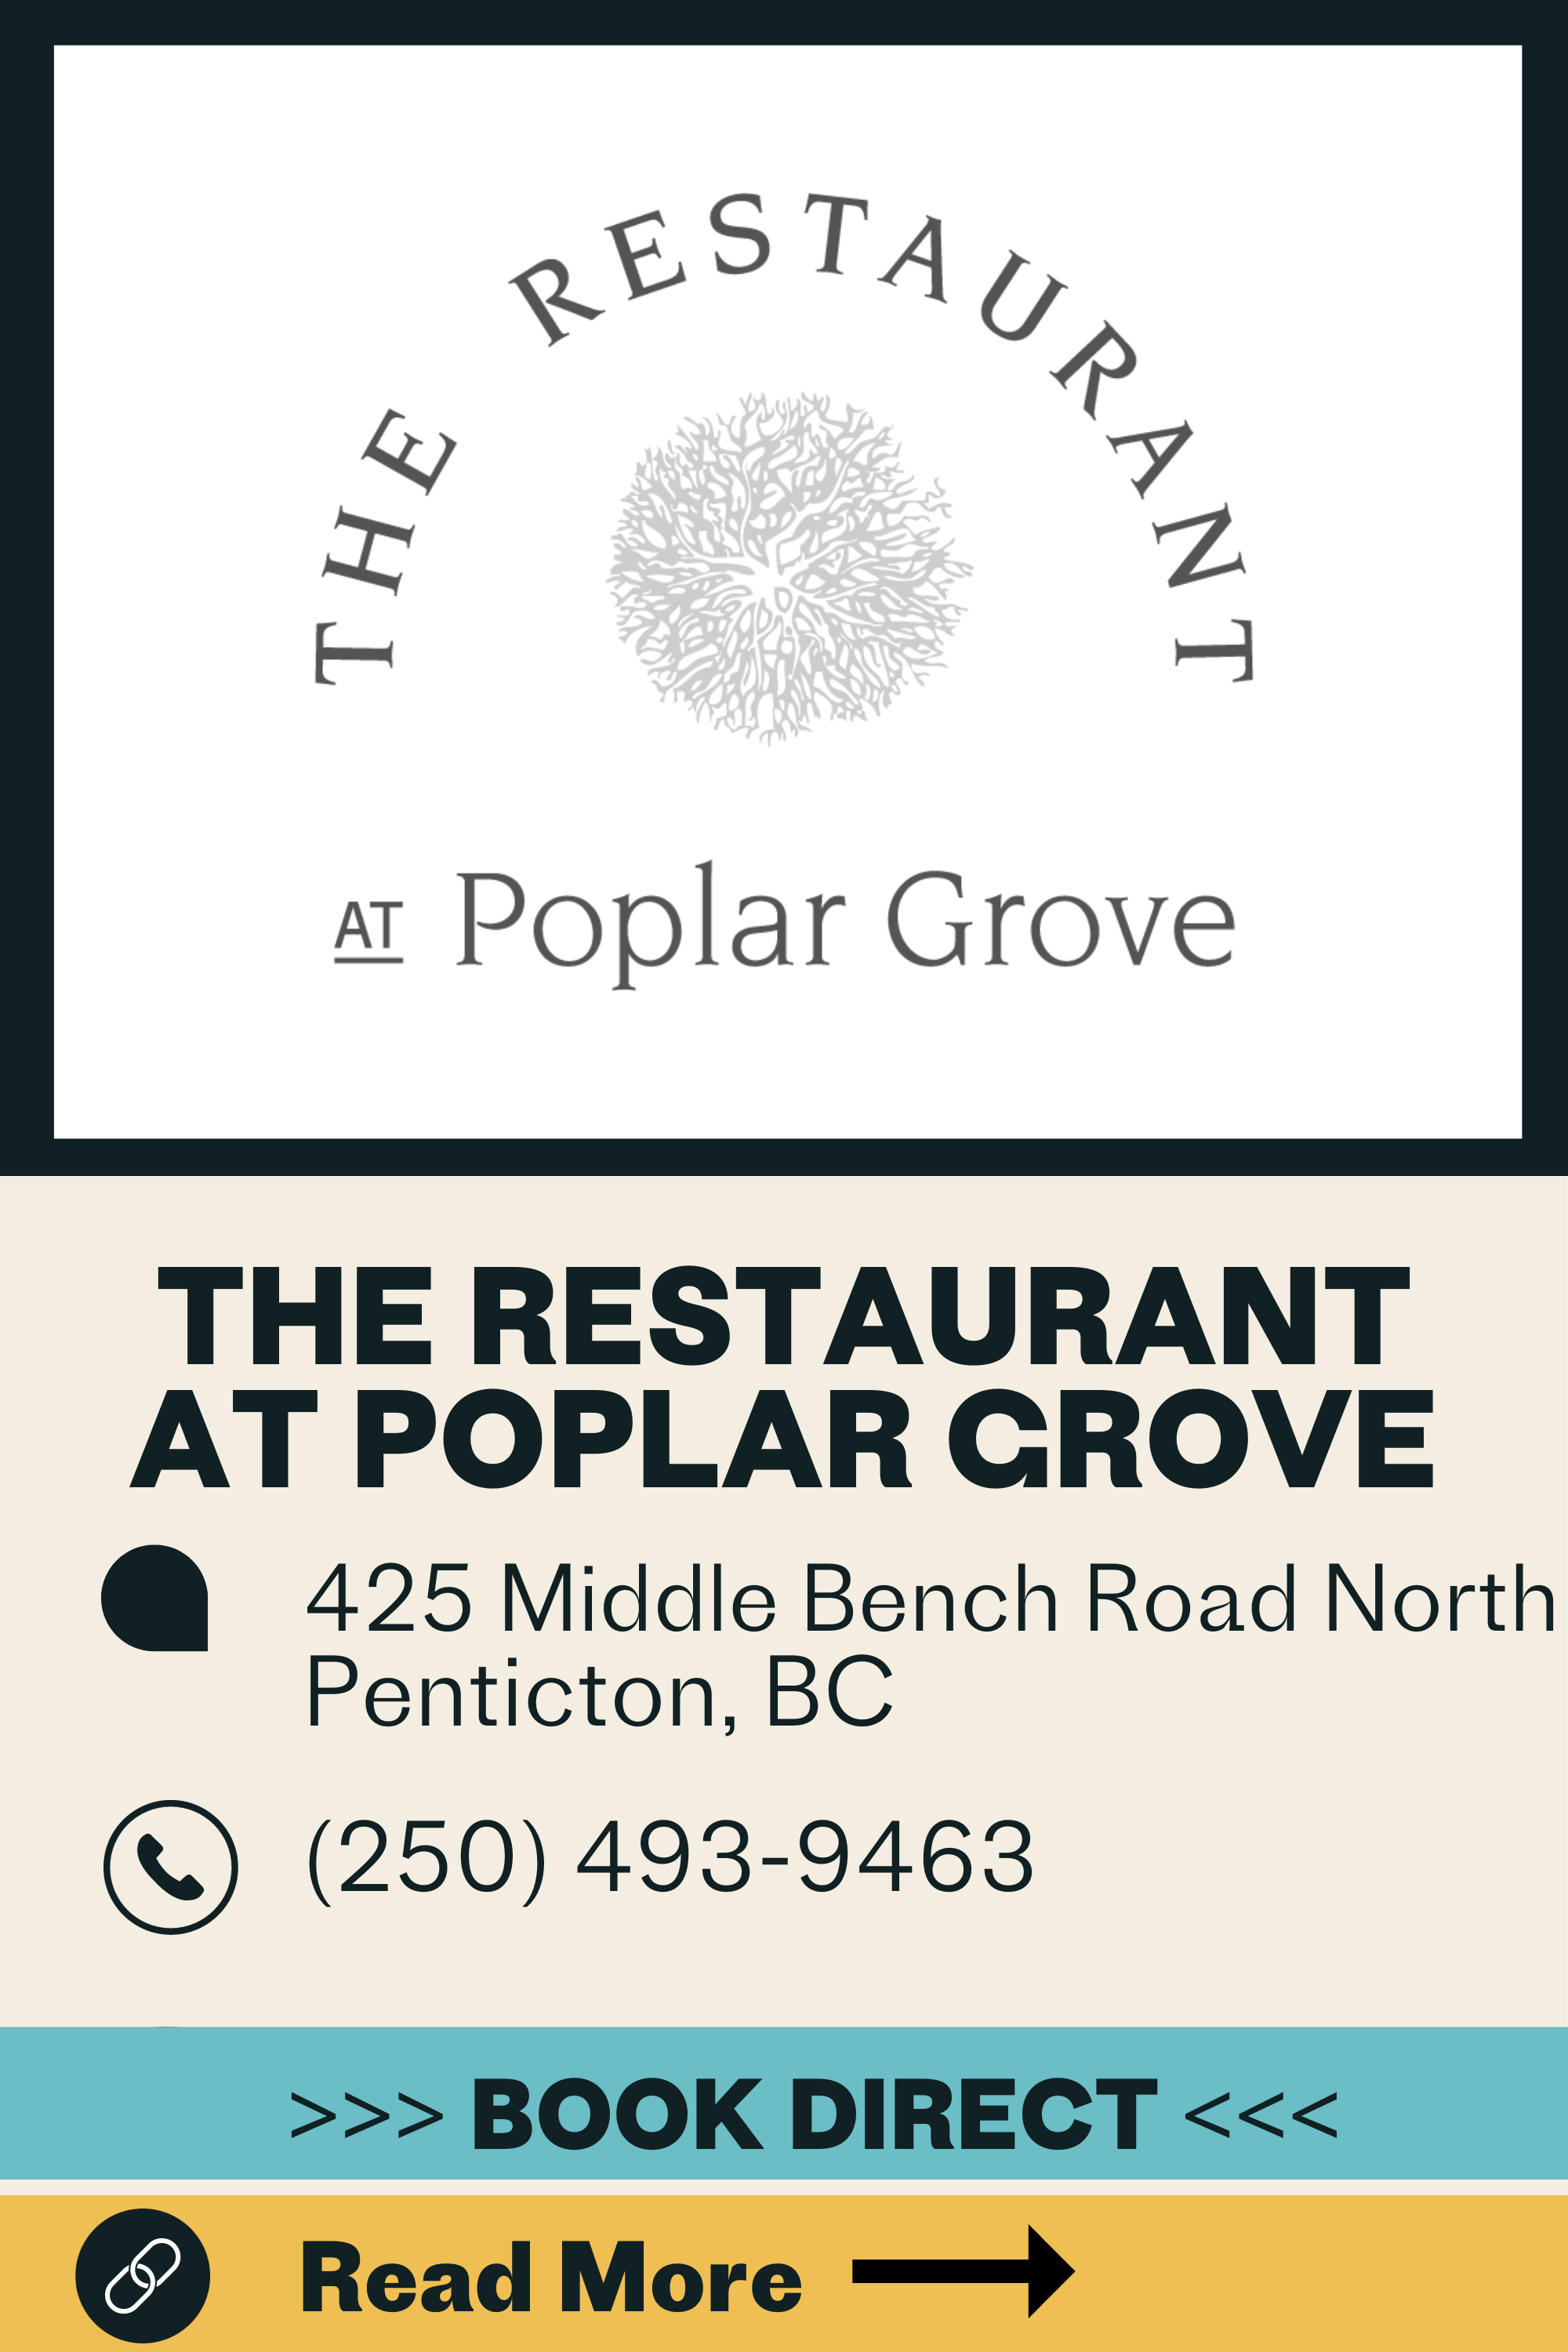 Poplar grove restaurant.png